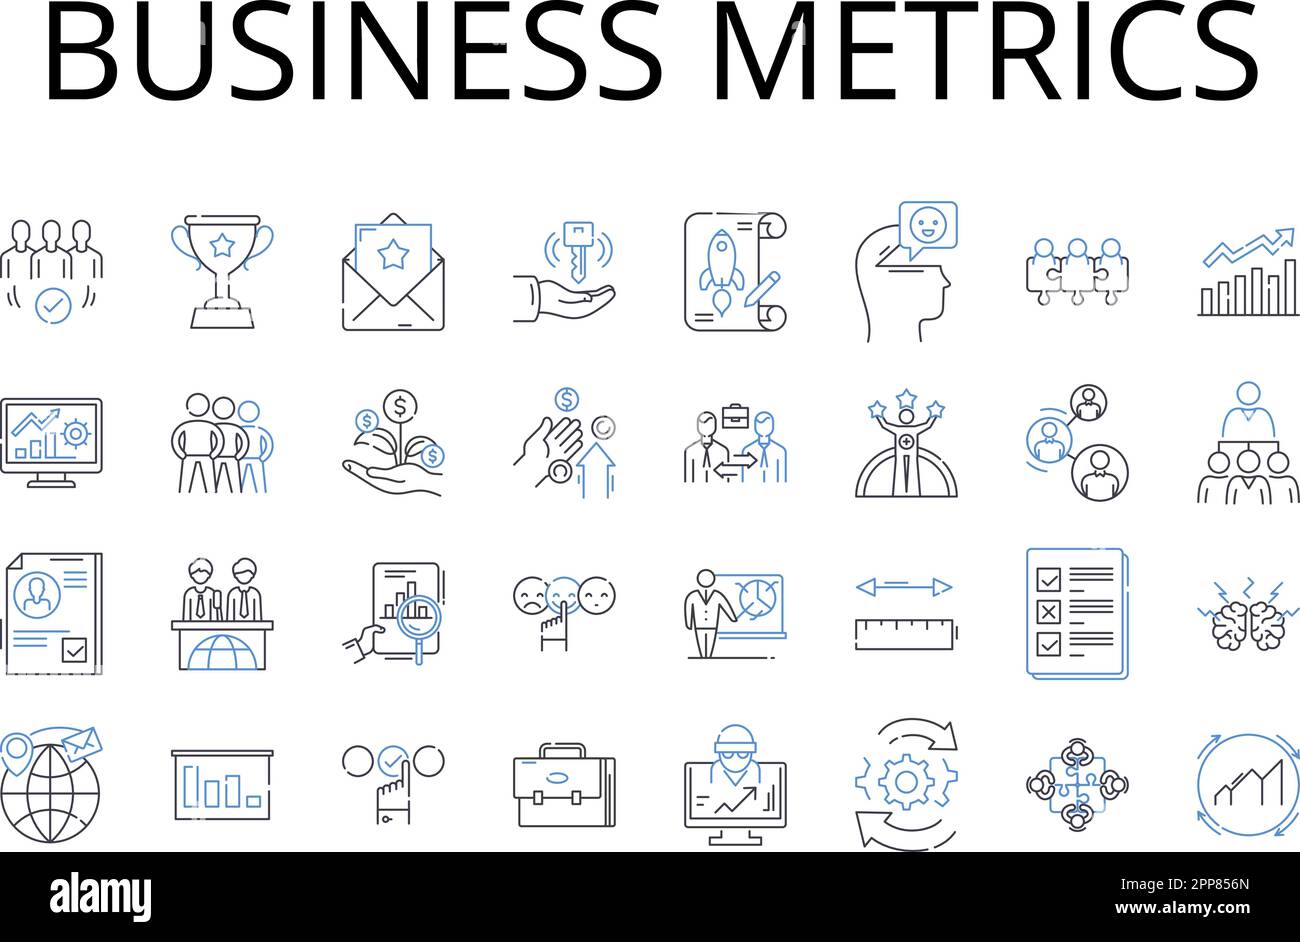 Business metrics line icons collection. Financial indicators, Performance measures, Marketing analytics, Sales metrics, Operational data, Customer Stock Vector